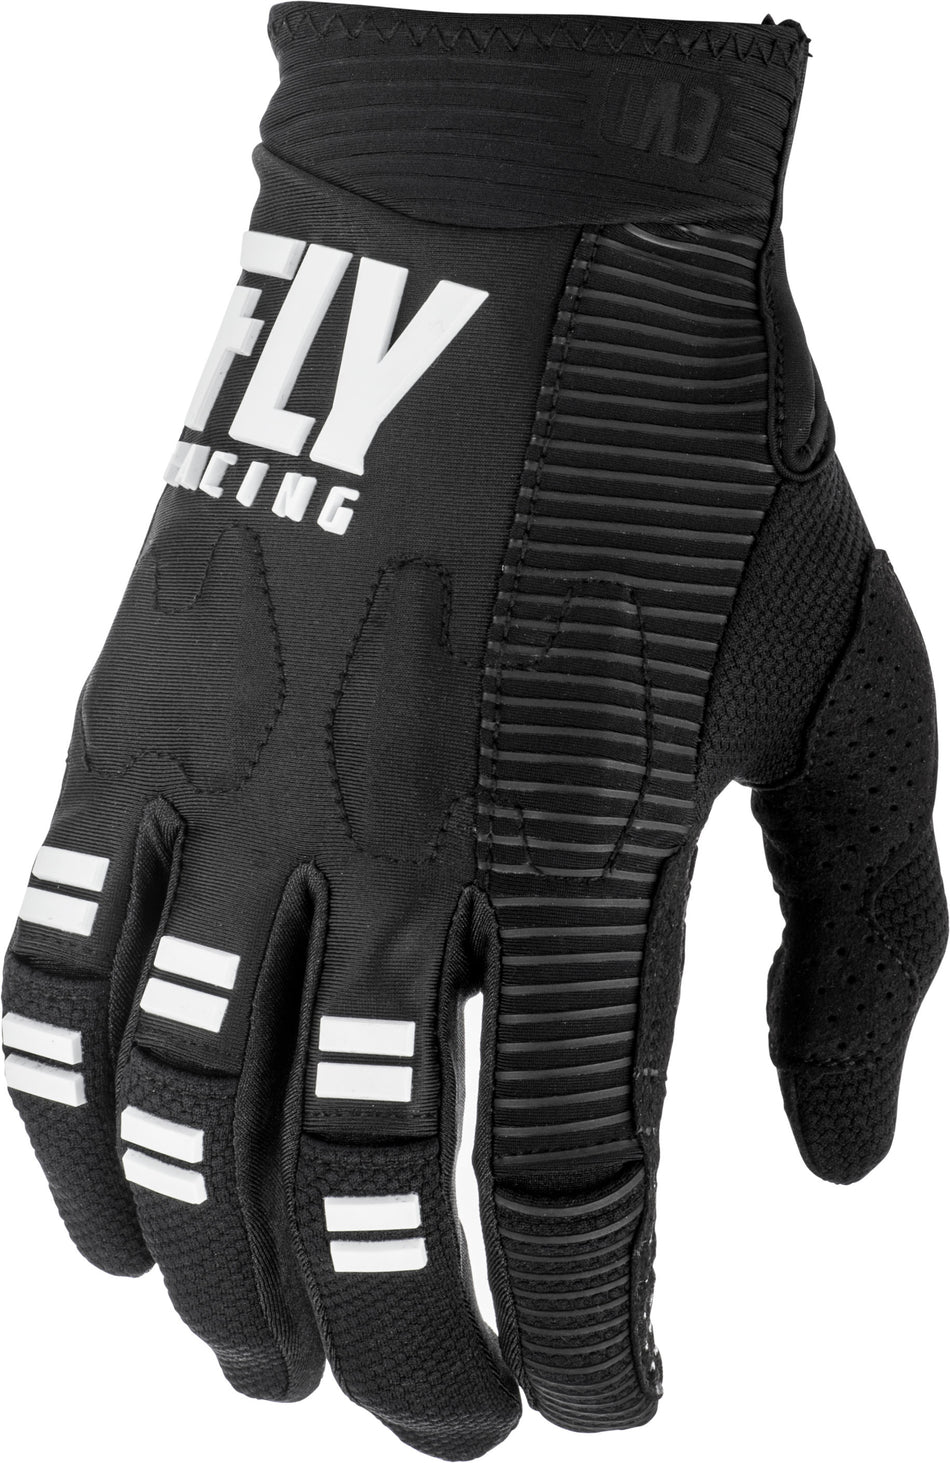 FLY RACING Evolution Dst Gloves Black/White Sz 10 372-11010